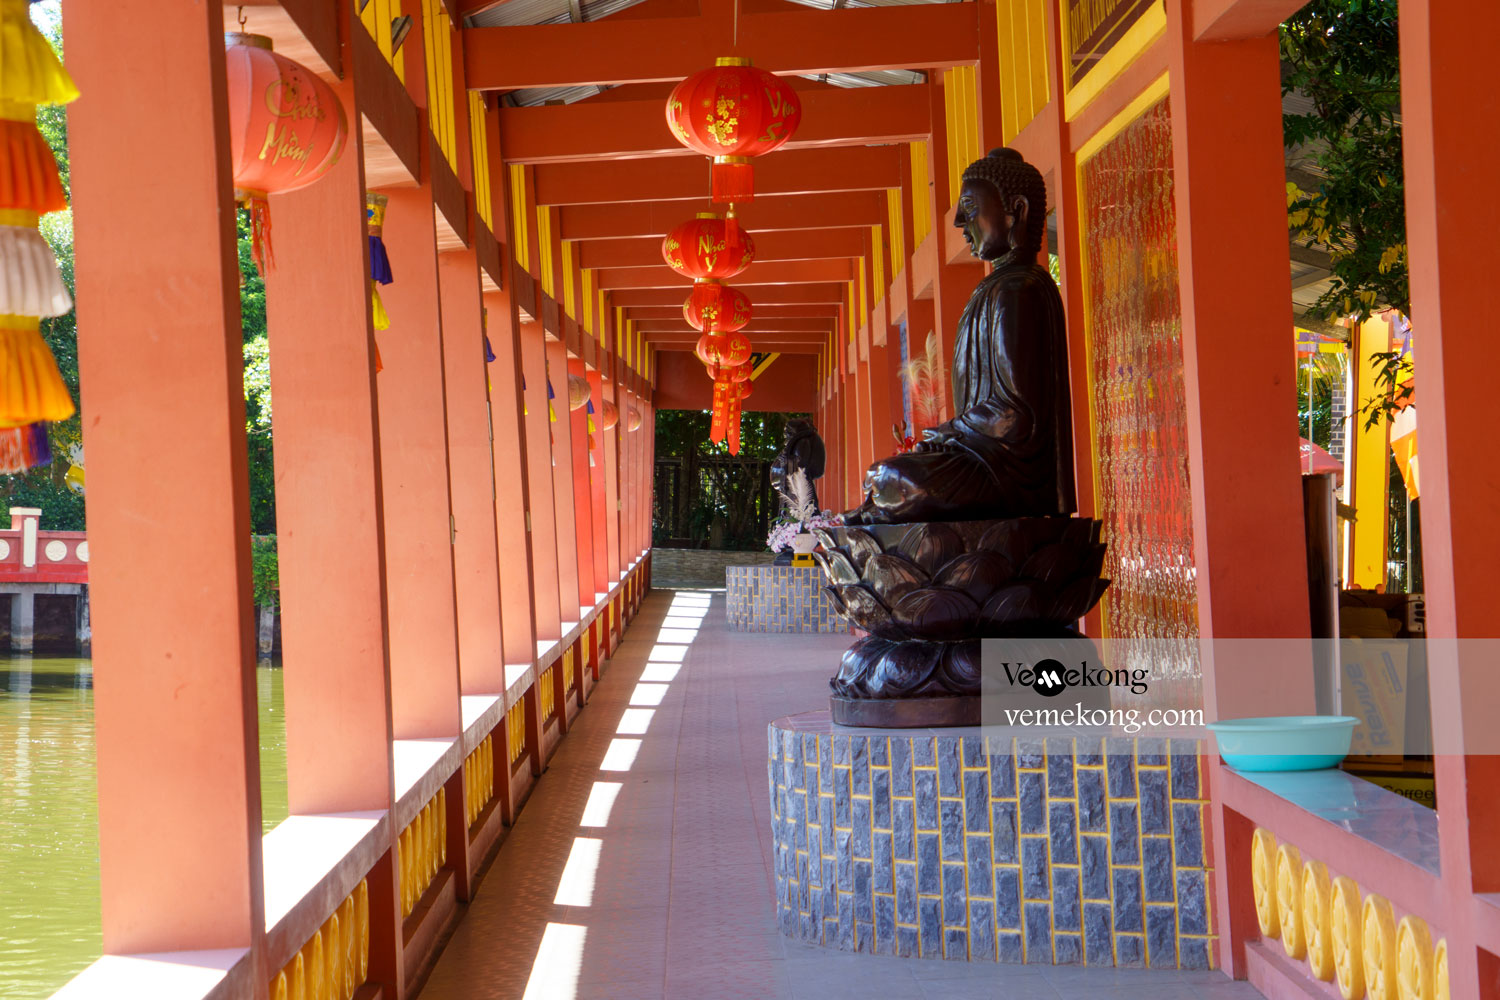 Phat Hoc 2 Pagoda (Buddhist Pagoda 2) - Things to See in Soc Trang, Vietnam